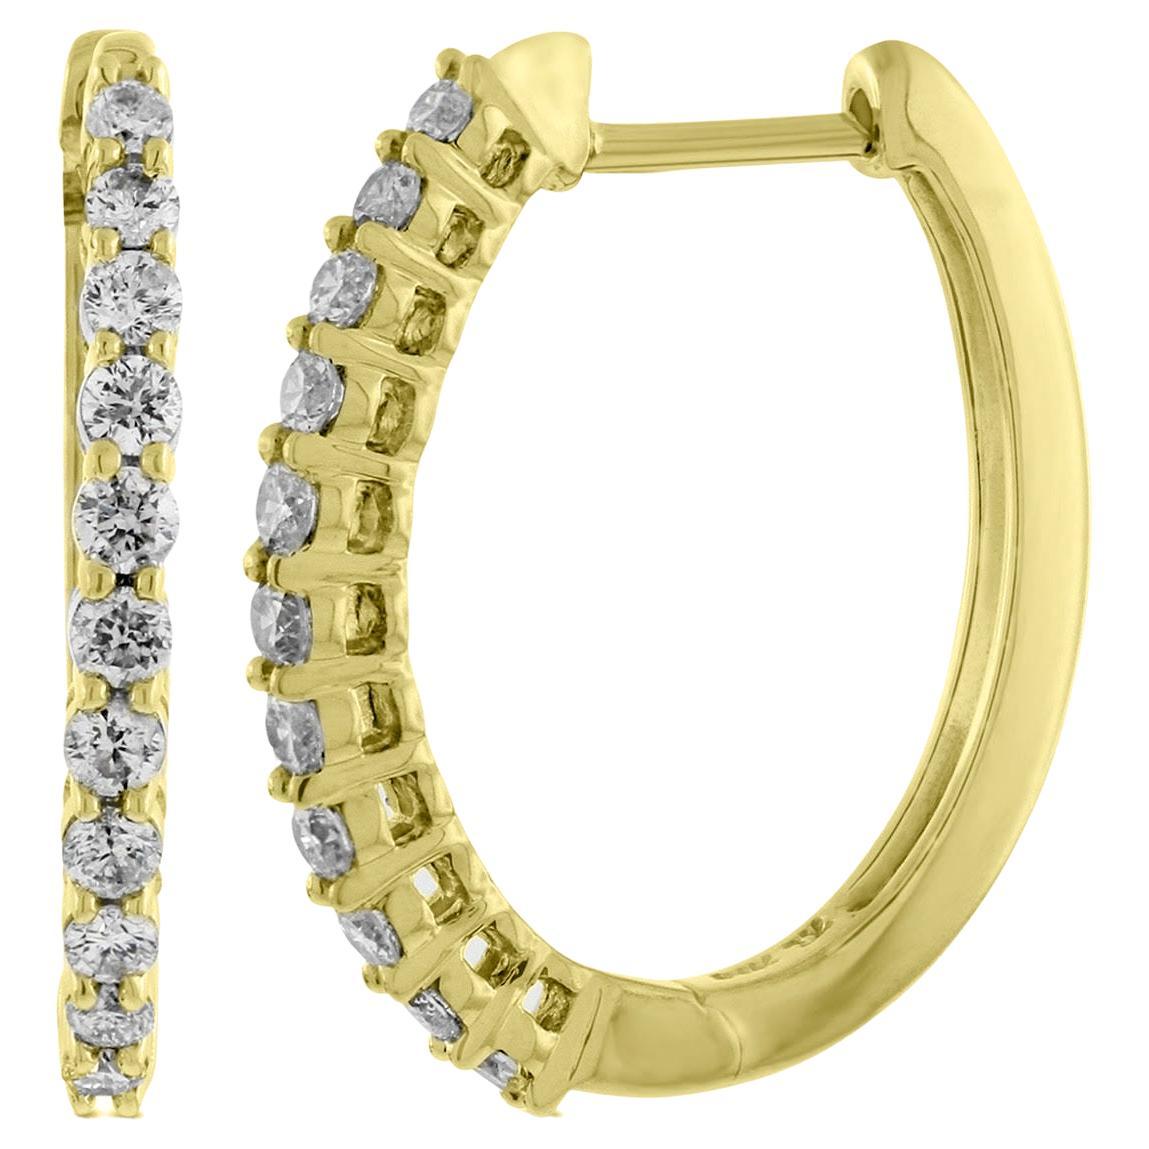  .50 Carat Total Weight Diamond Outside Oval Hoop Earrings 14K Yellow Gold		